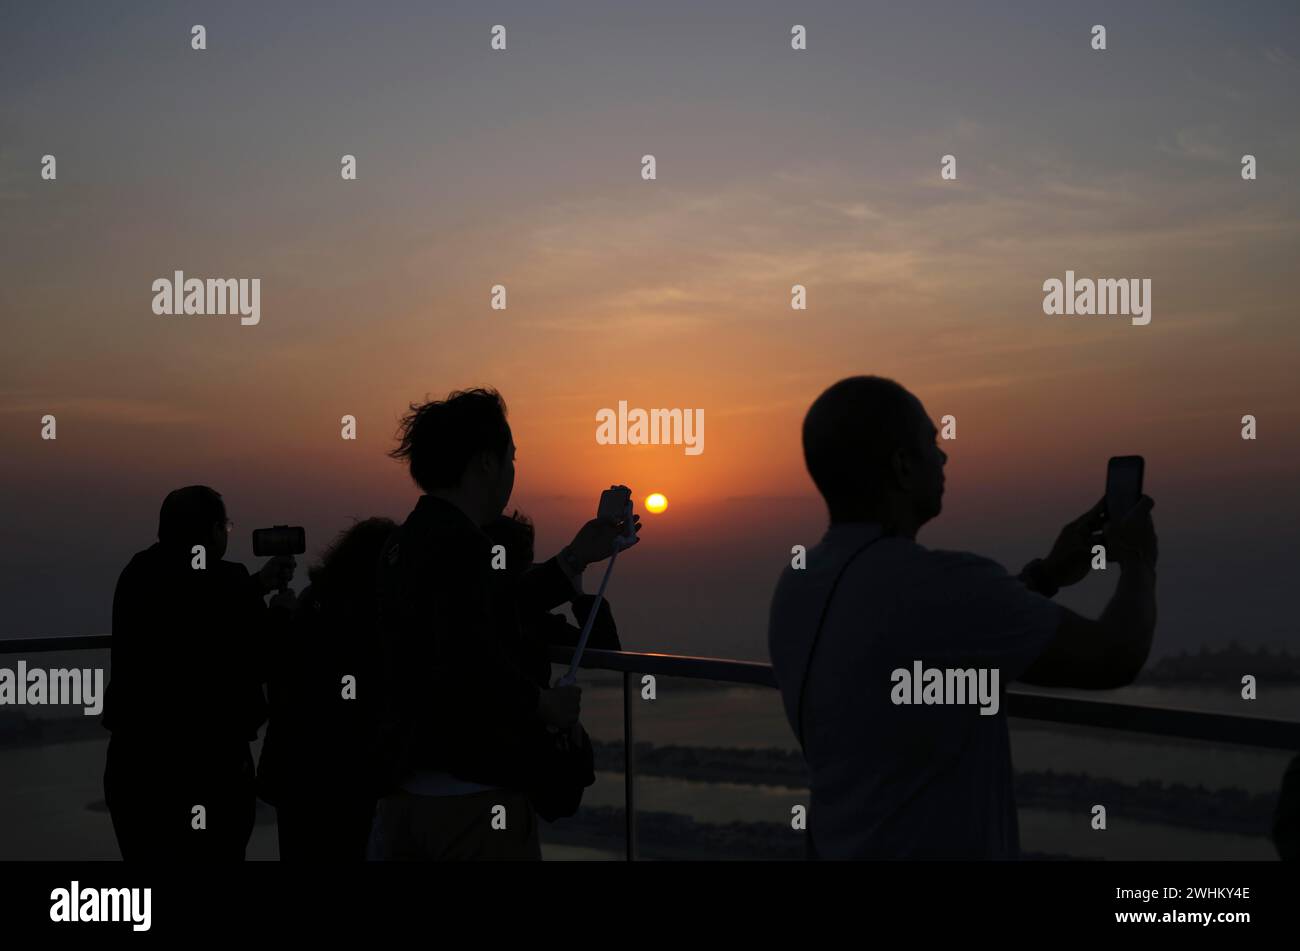 I turisti scattano selfie con smartphone, bastone per selfie, The View at the Palm, Palm Jumeirah, tramonto, atmosfera serale, Dubai, Emirati Arabi Uniti, VAR Foto Stock